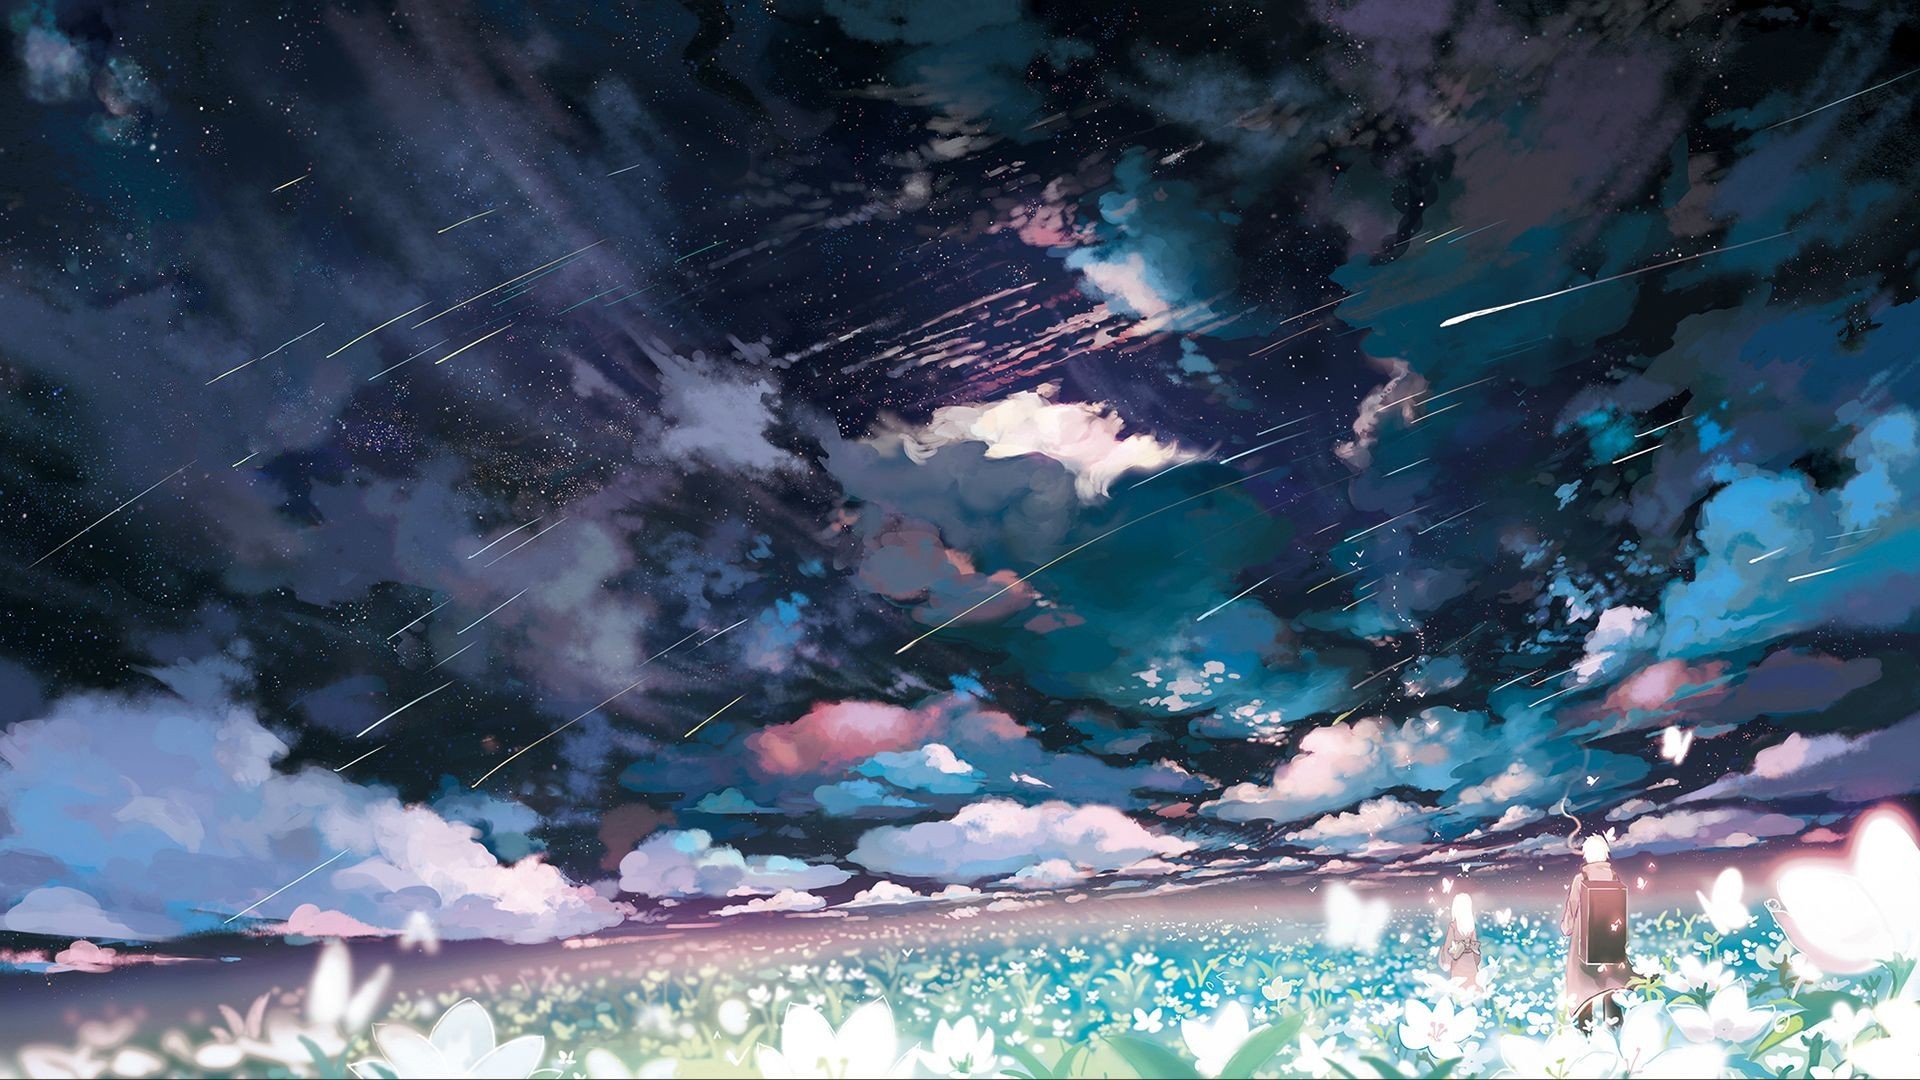 Anime night sky wallpaper 2019 for desktop background in high definition - Laptop, art